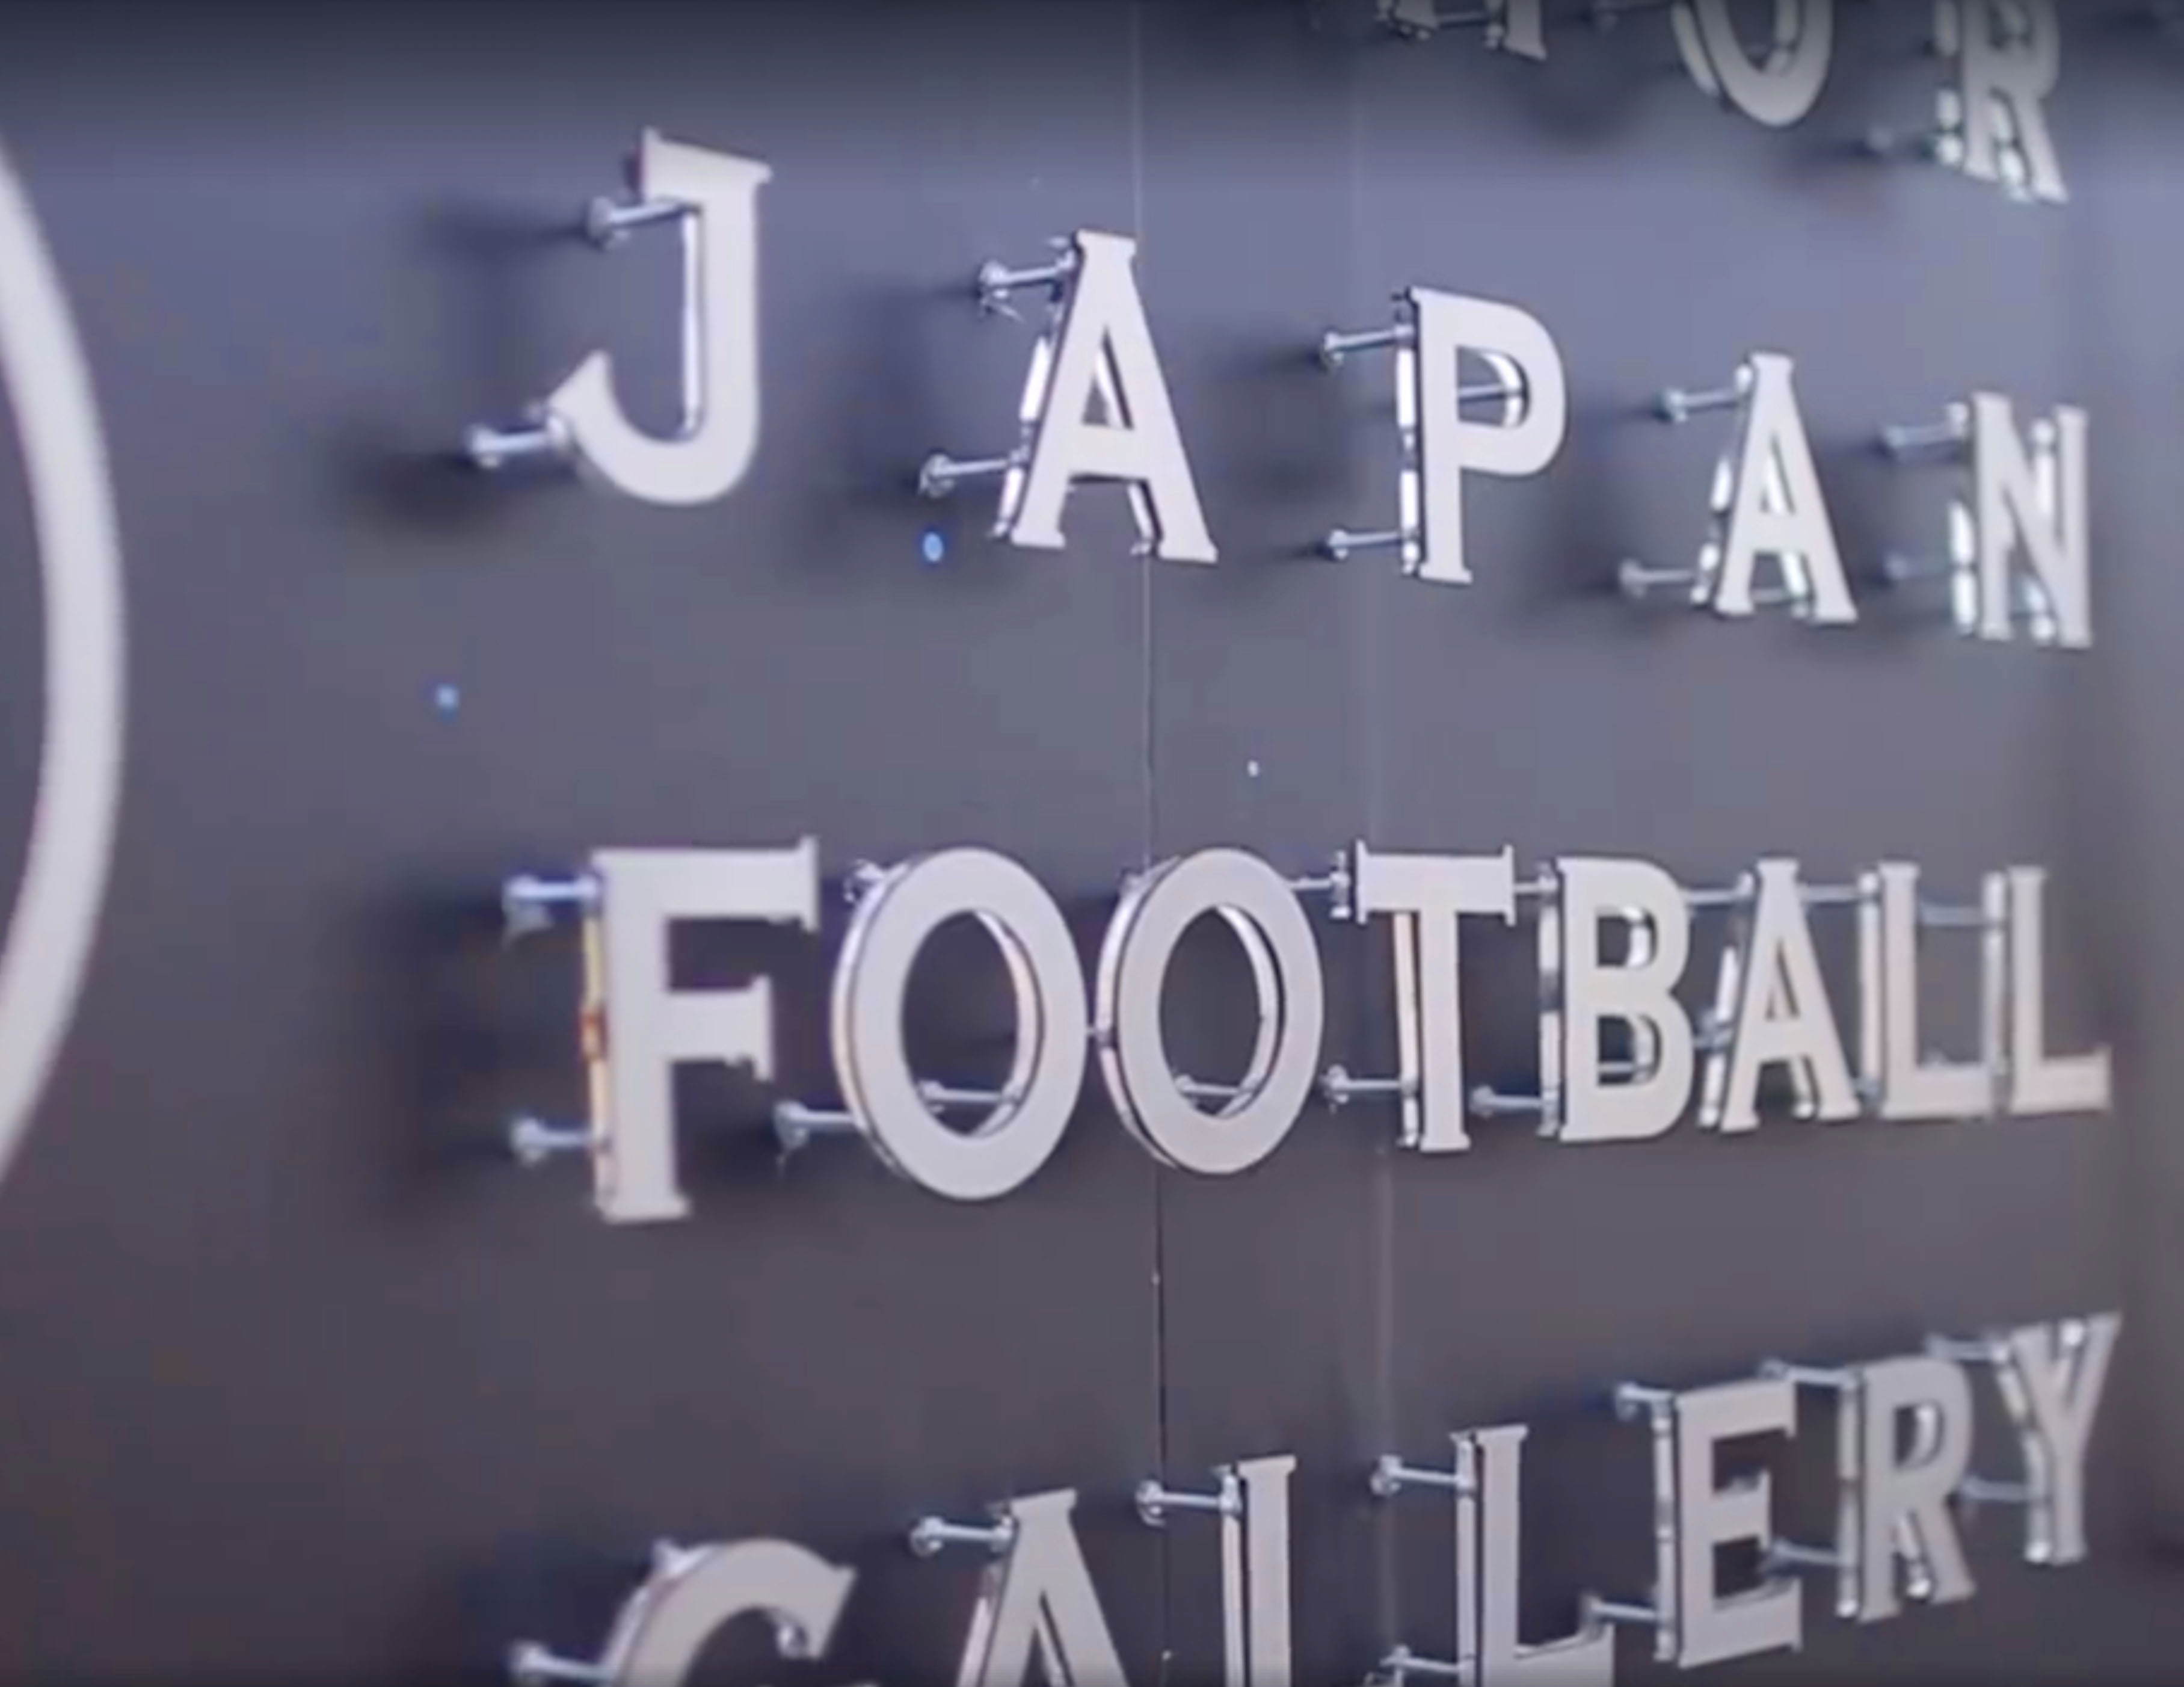 Johor Japan Football Gallery